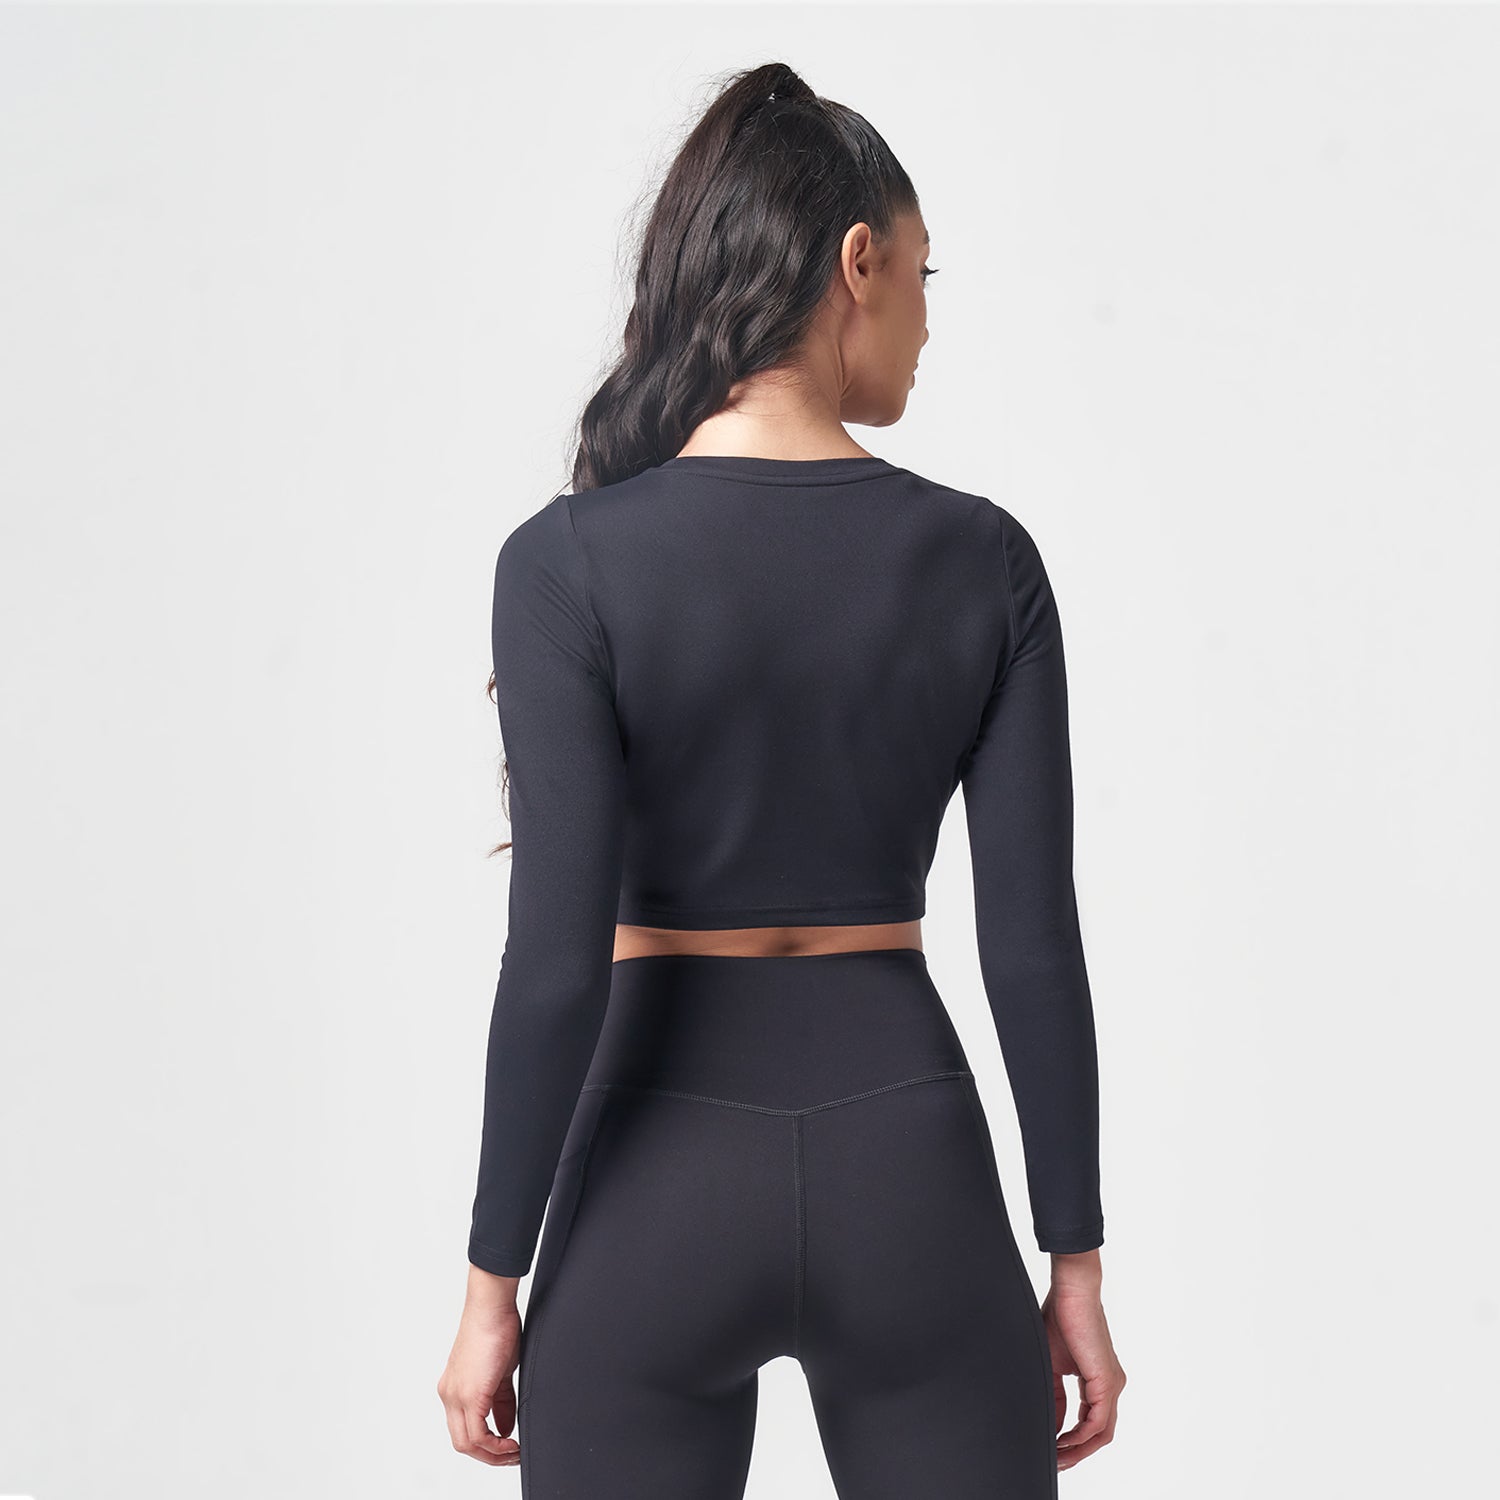 Cropped Black Long Sleeve Workout Top - Women